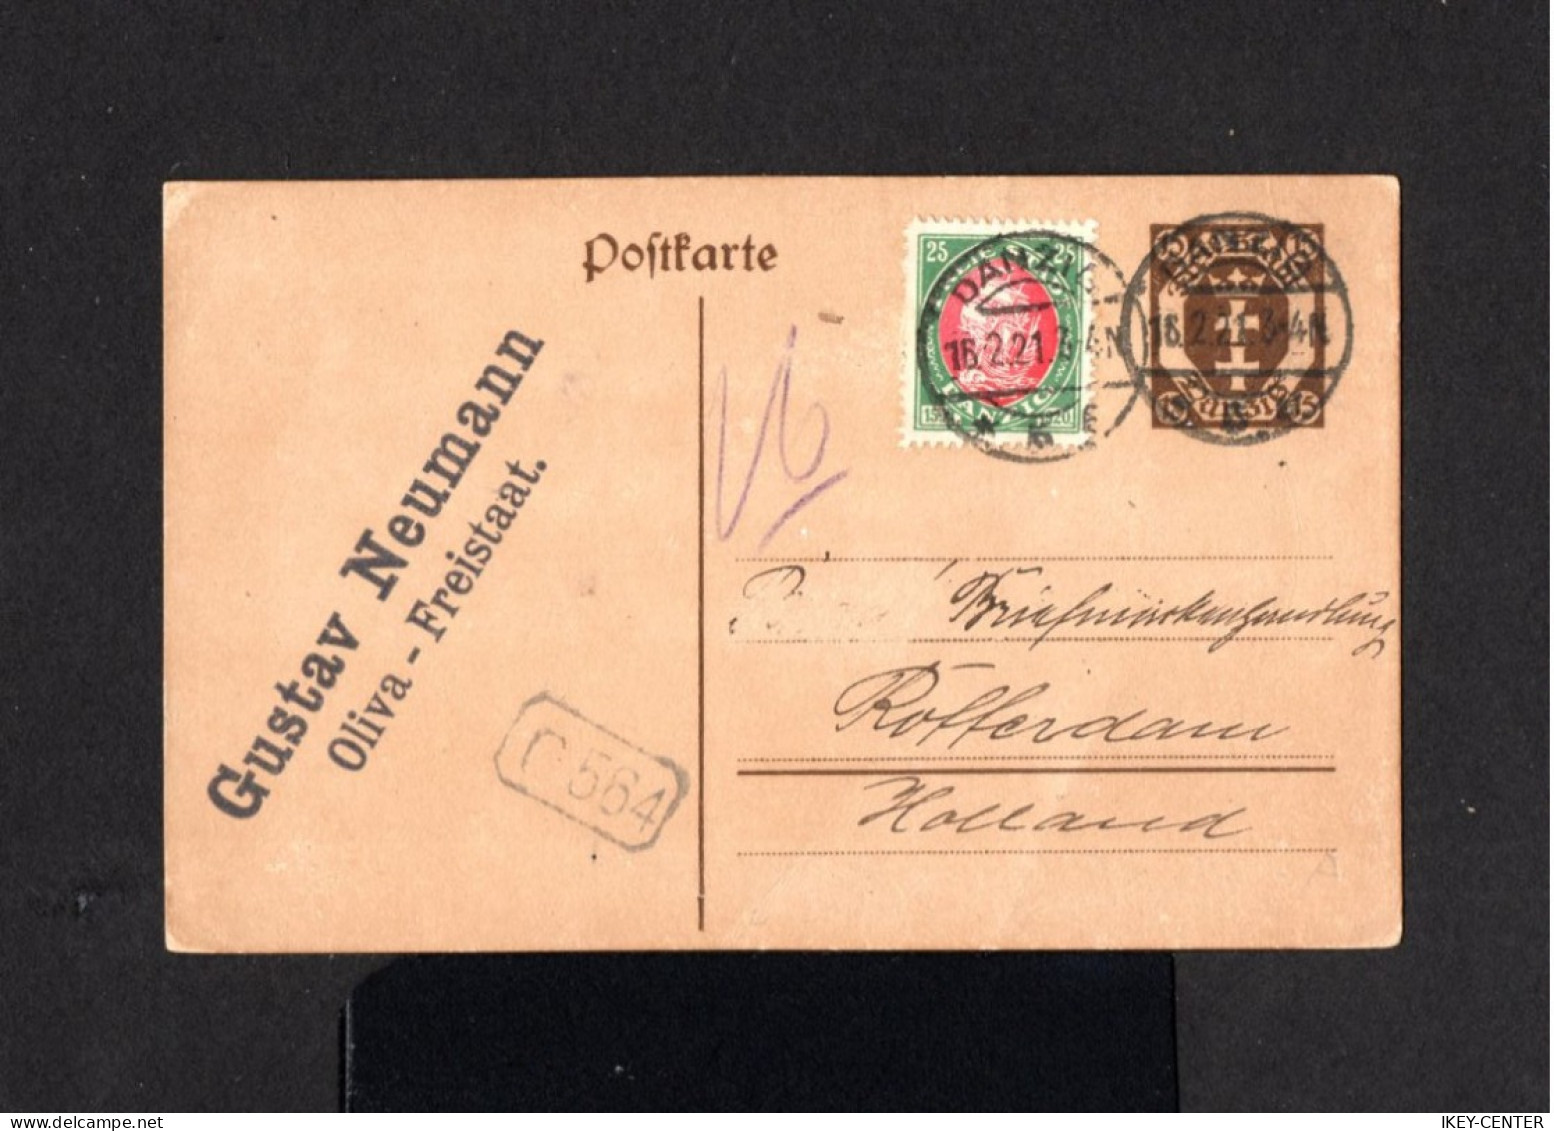 13523-DANZIG FREE STADT-OLD POSTCARD DANZIG To ROTTERDAM (holland).1921.Carte Postale.GERMANY. - Postwaardestukken